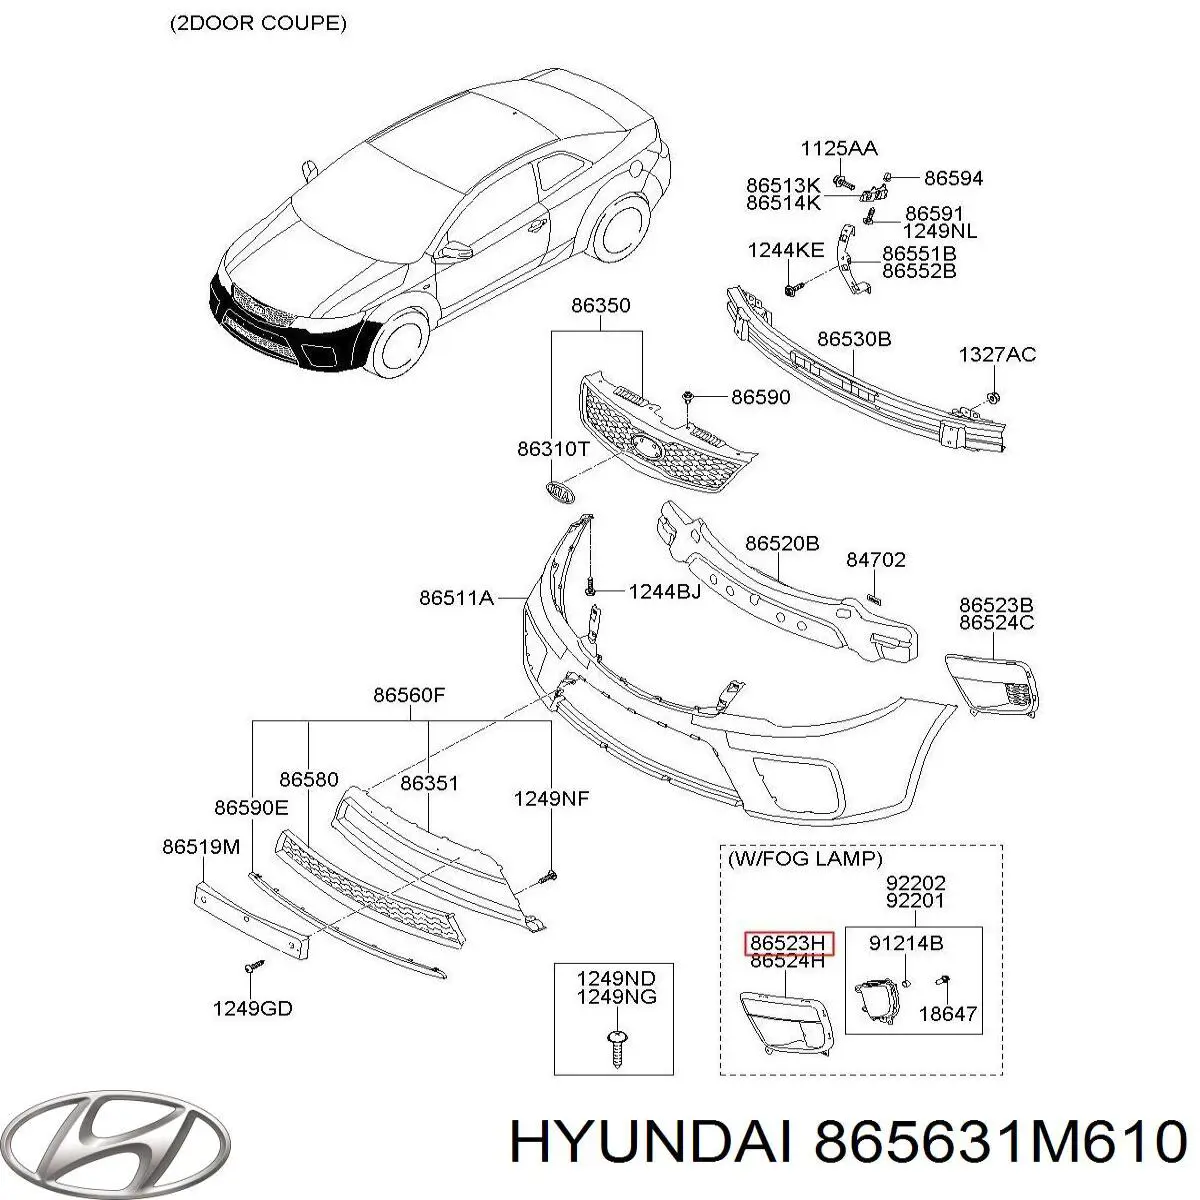 865631M610 Hyundai/Kia ободок (окантовка фары противотуманной левой)